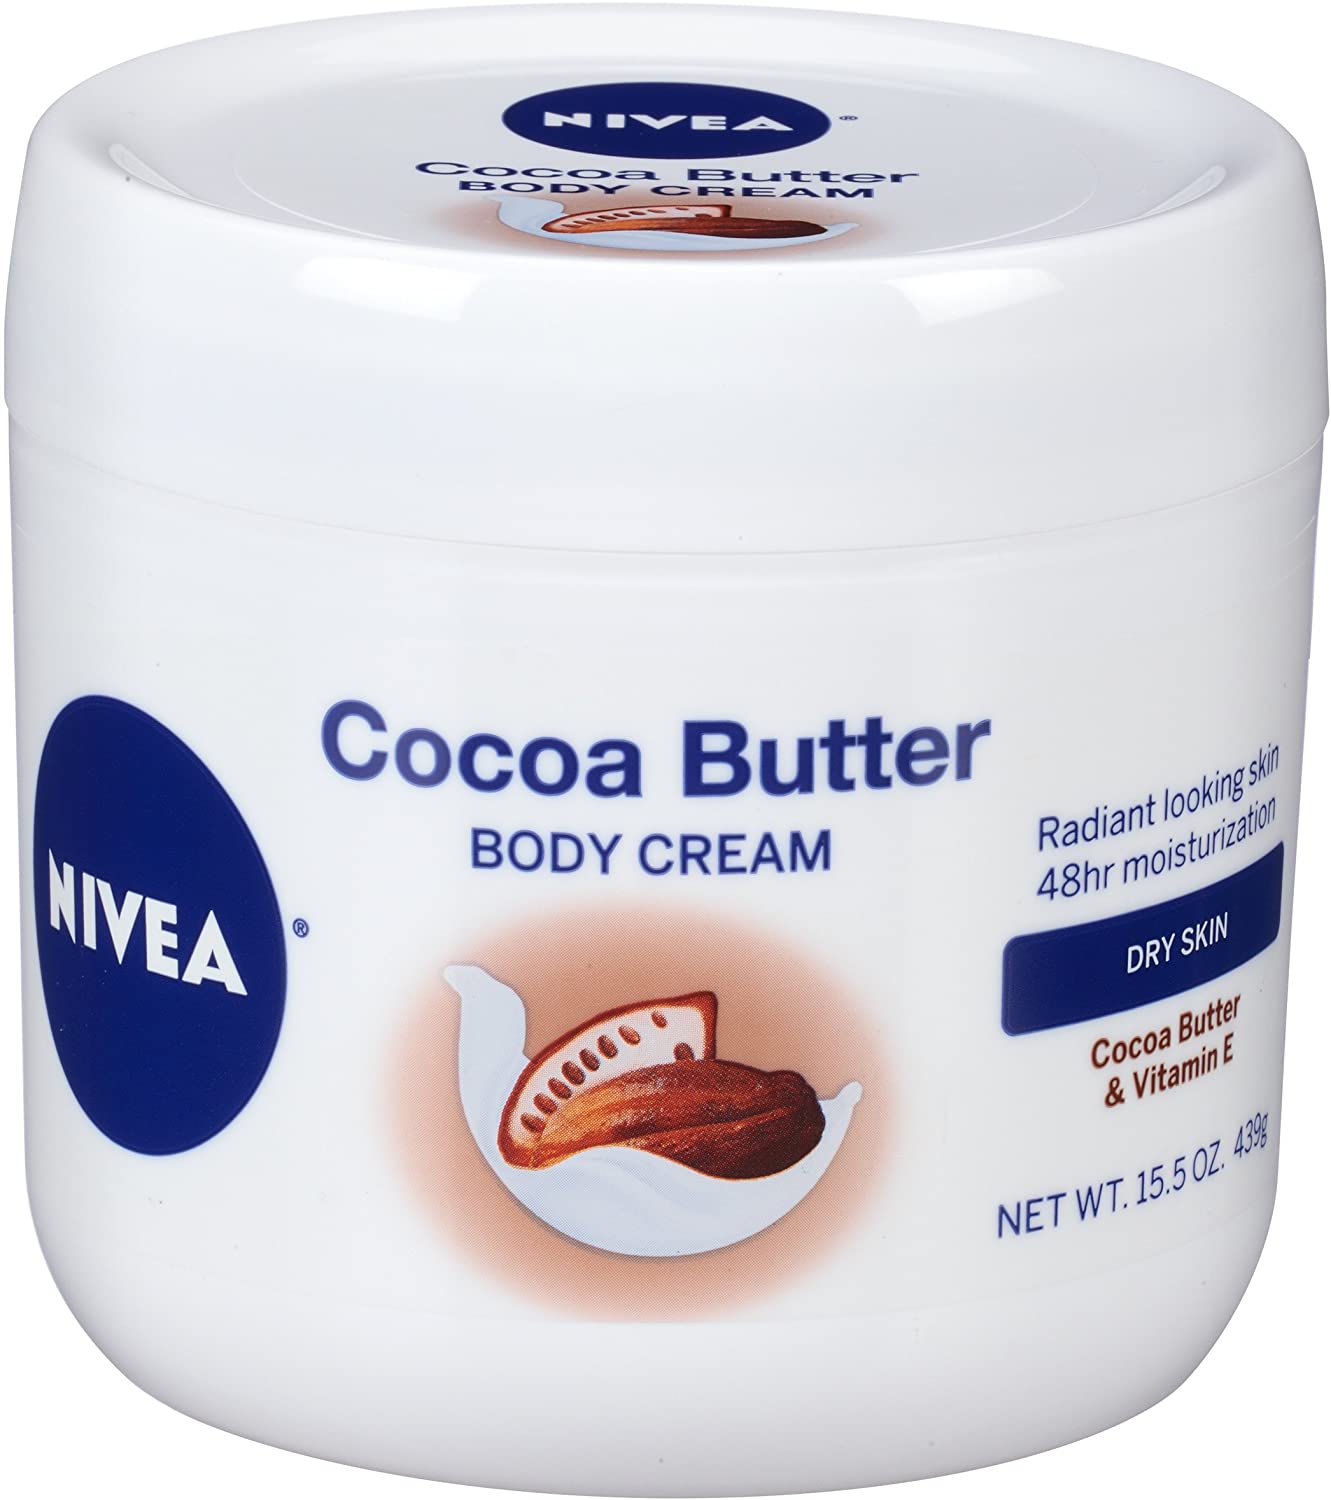 15.5-Oz NIVEA Cocoa Butter Body Cream $3.22 w/ S&S + Free Shipping w/ Prime or on orders over $25